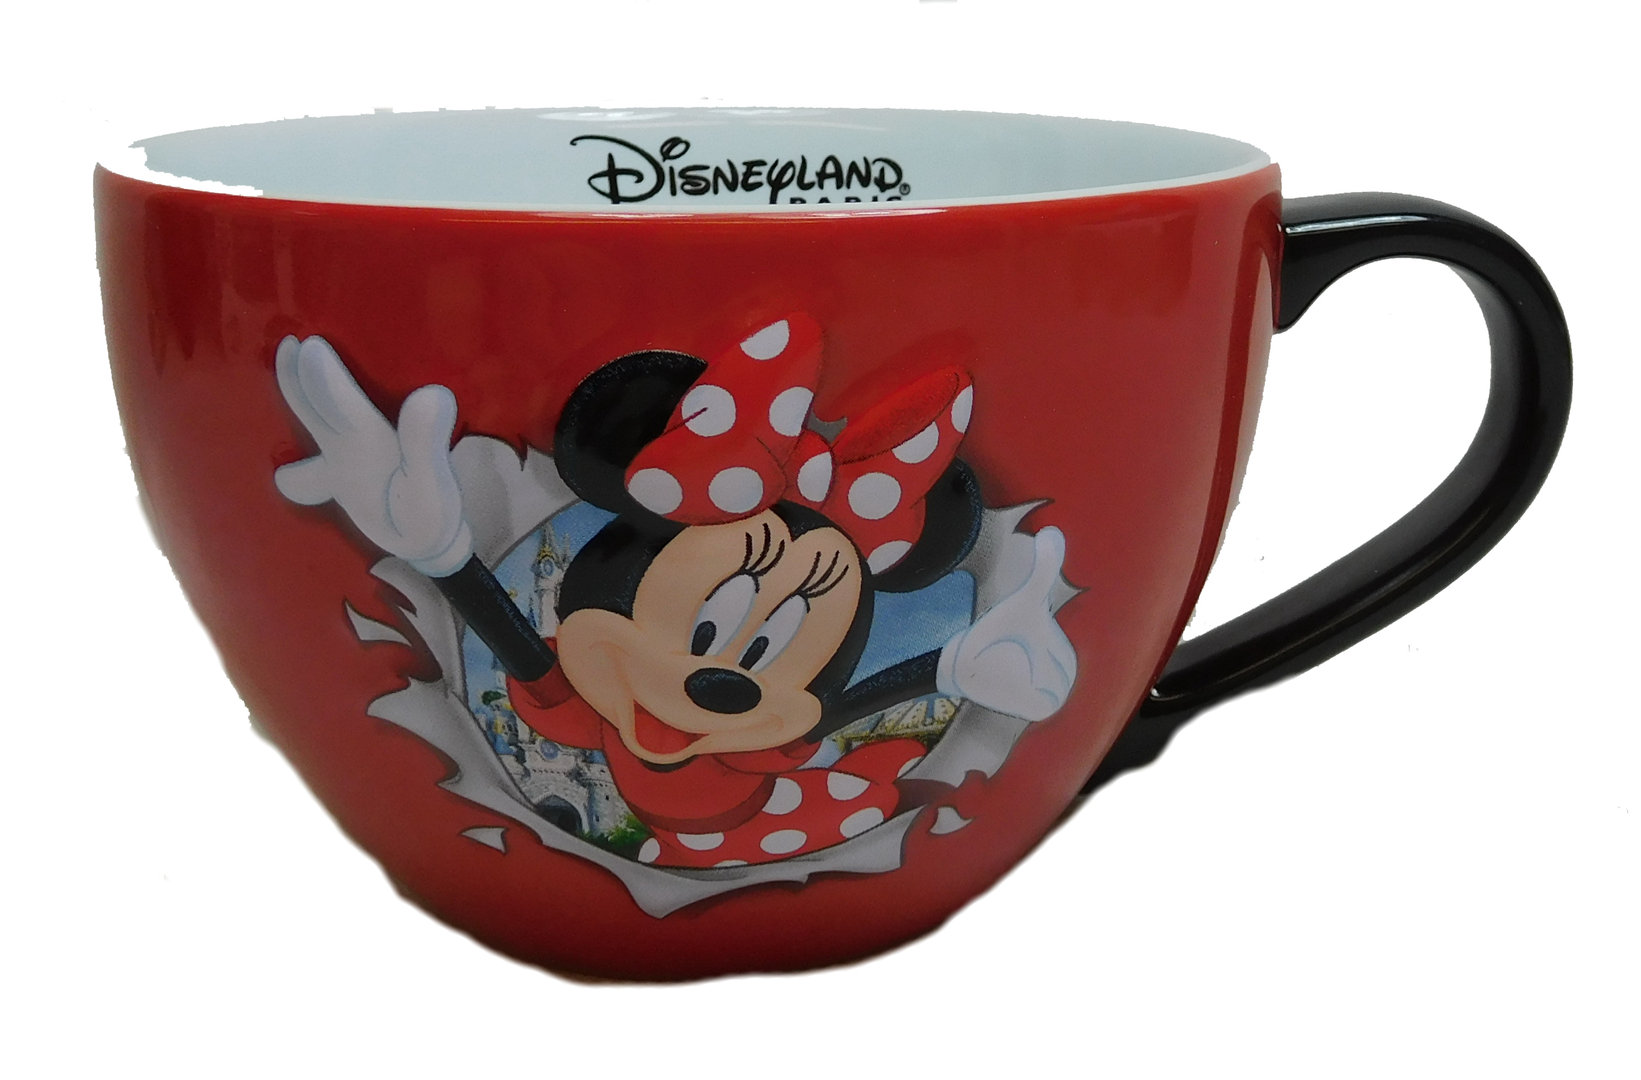 Disney Kaffeetasse Tasse Mug Pott Kaffee Becher Disneyland Alice im wunderlans 